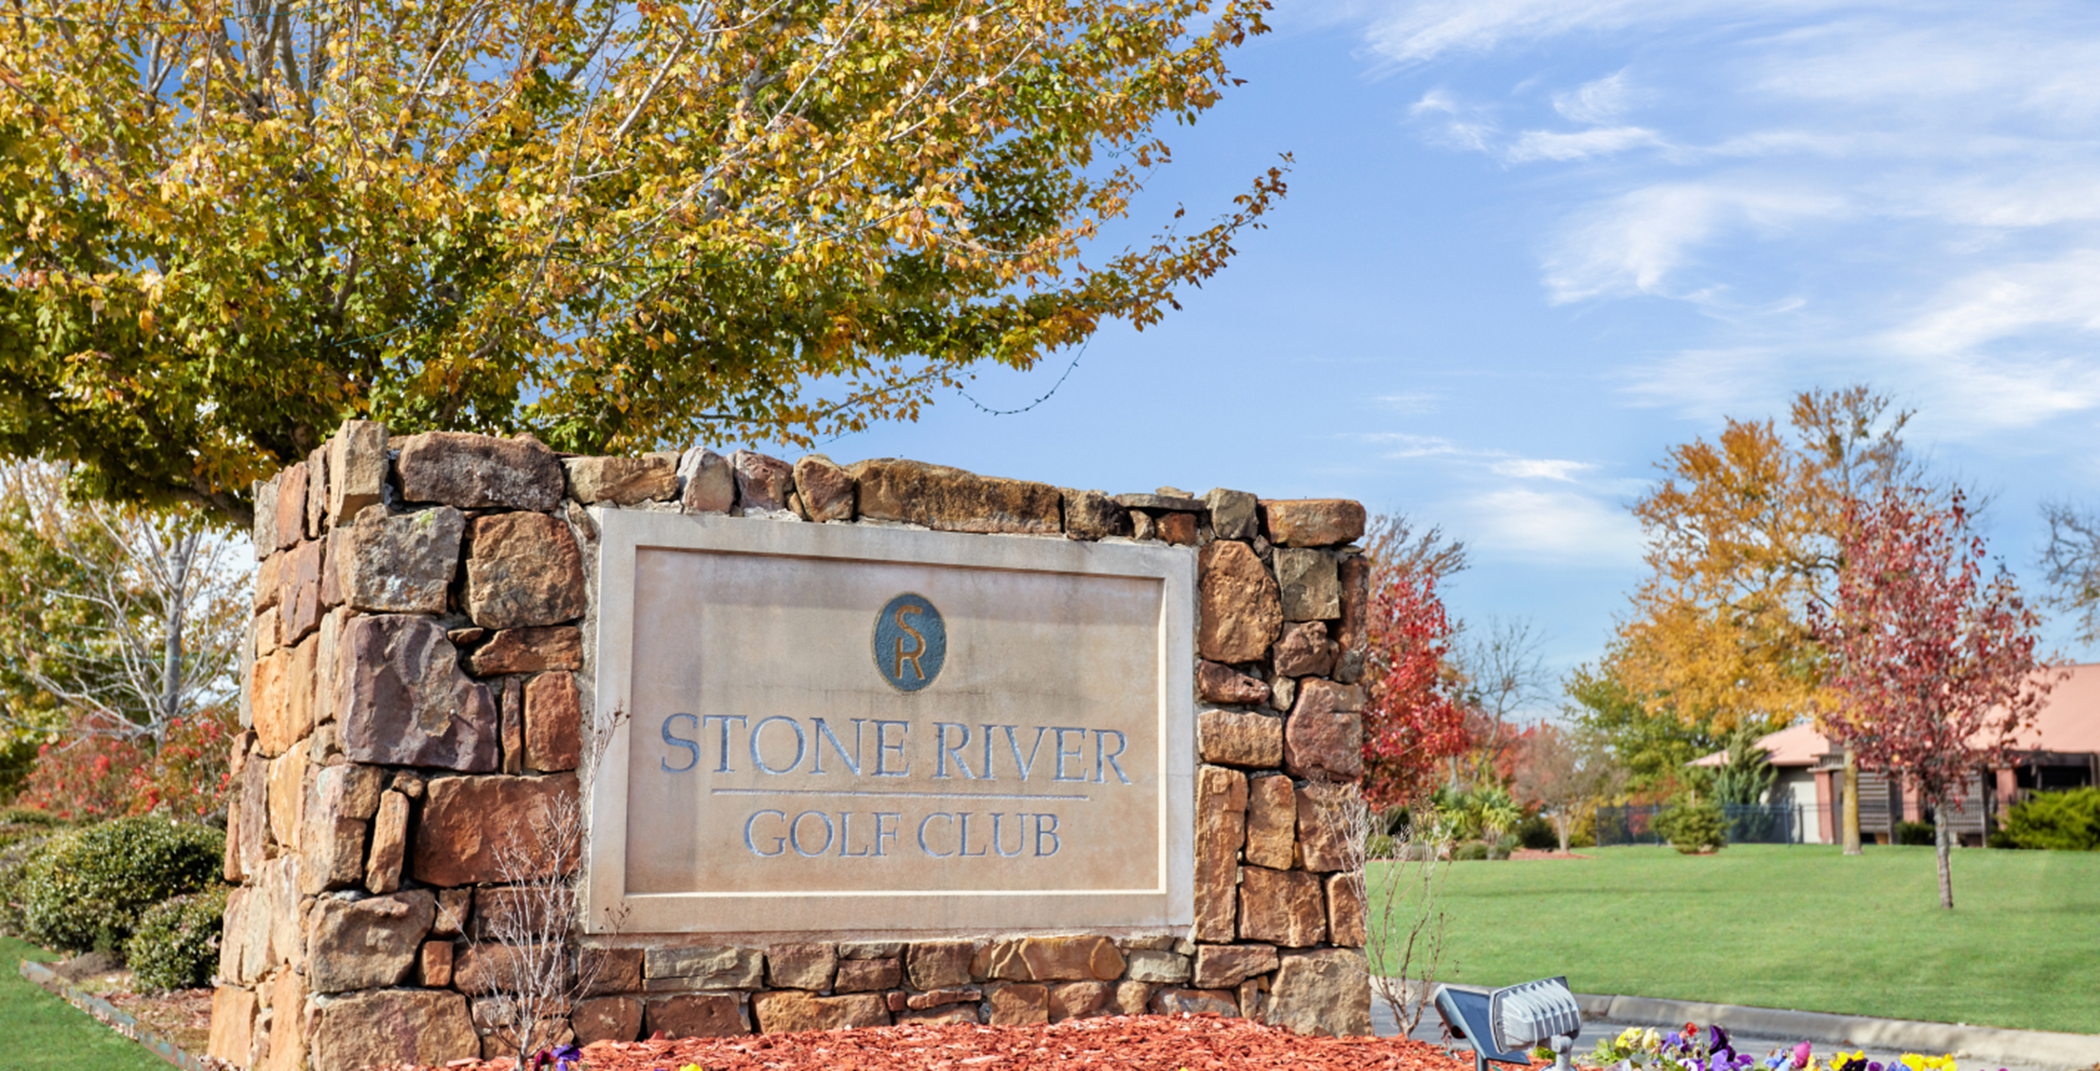 Stone River Golf Club sign